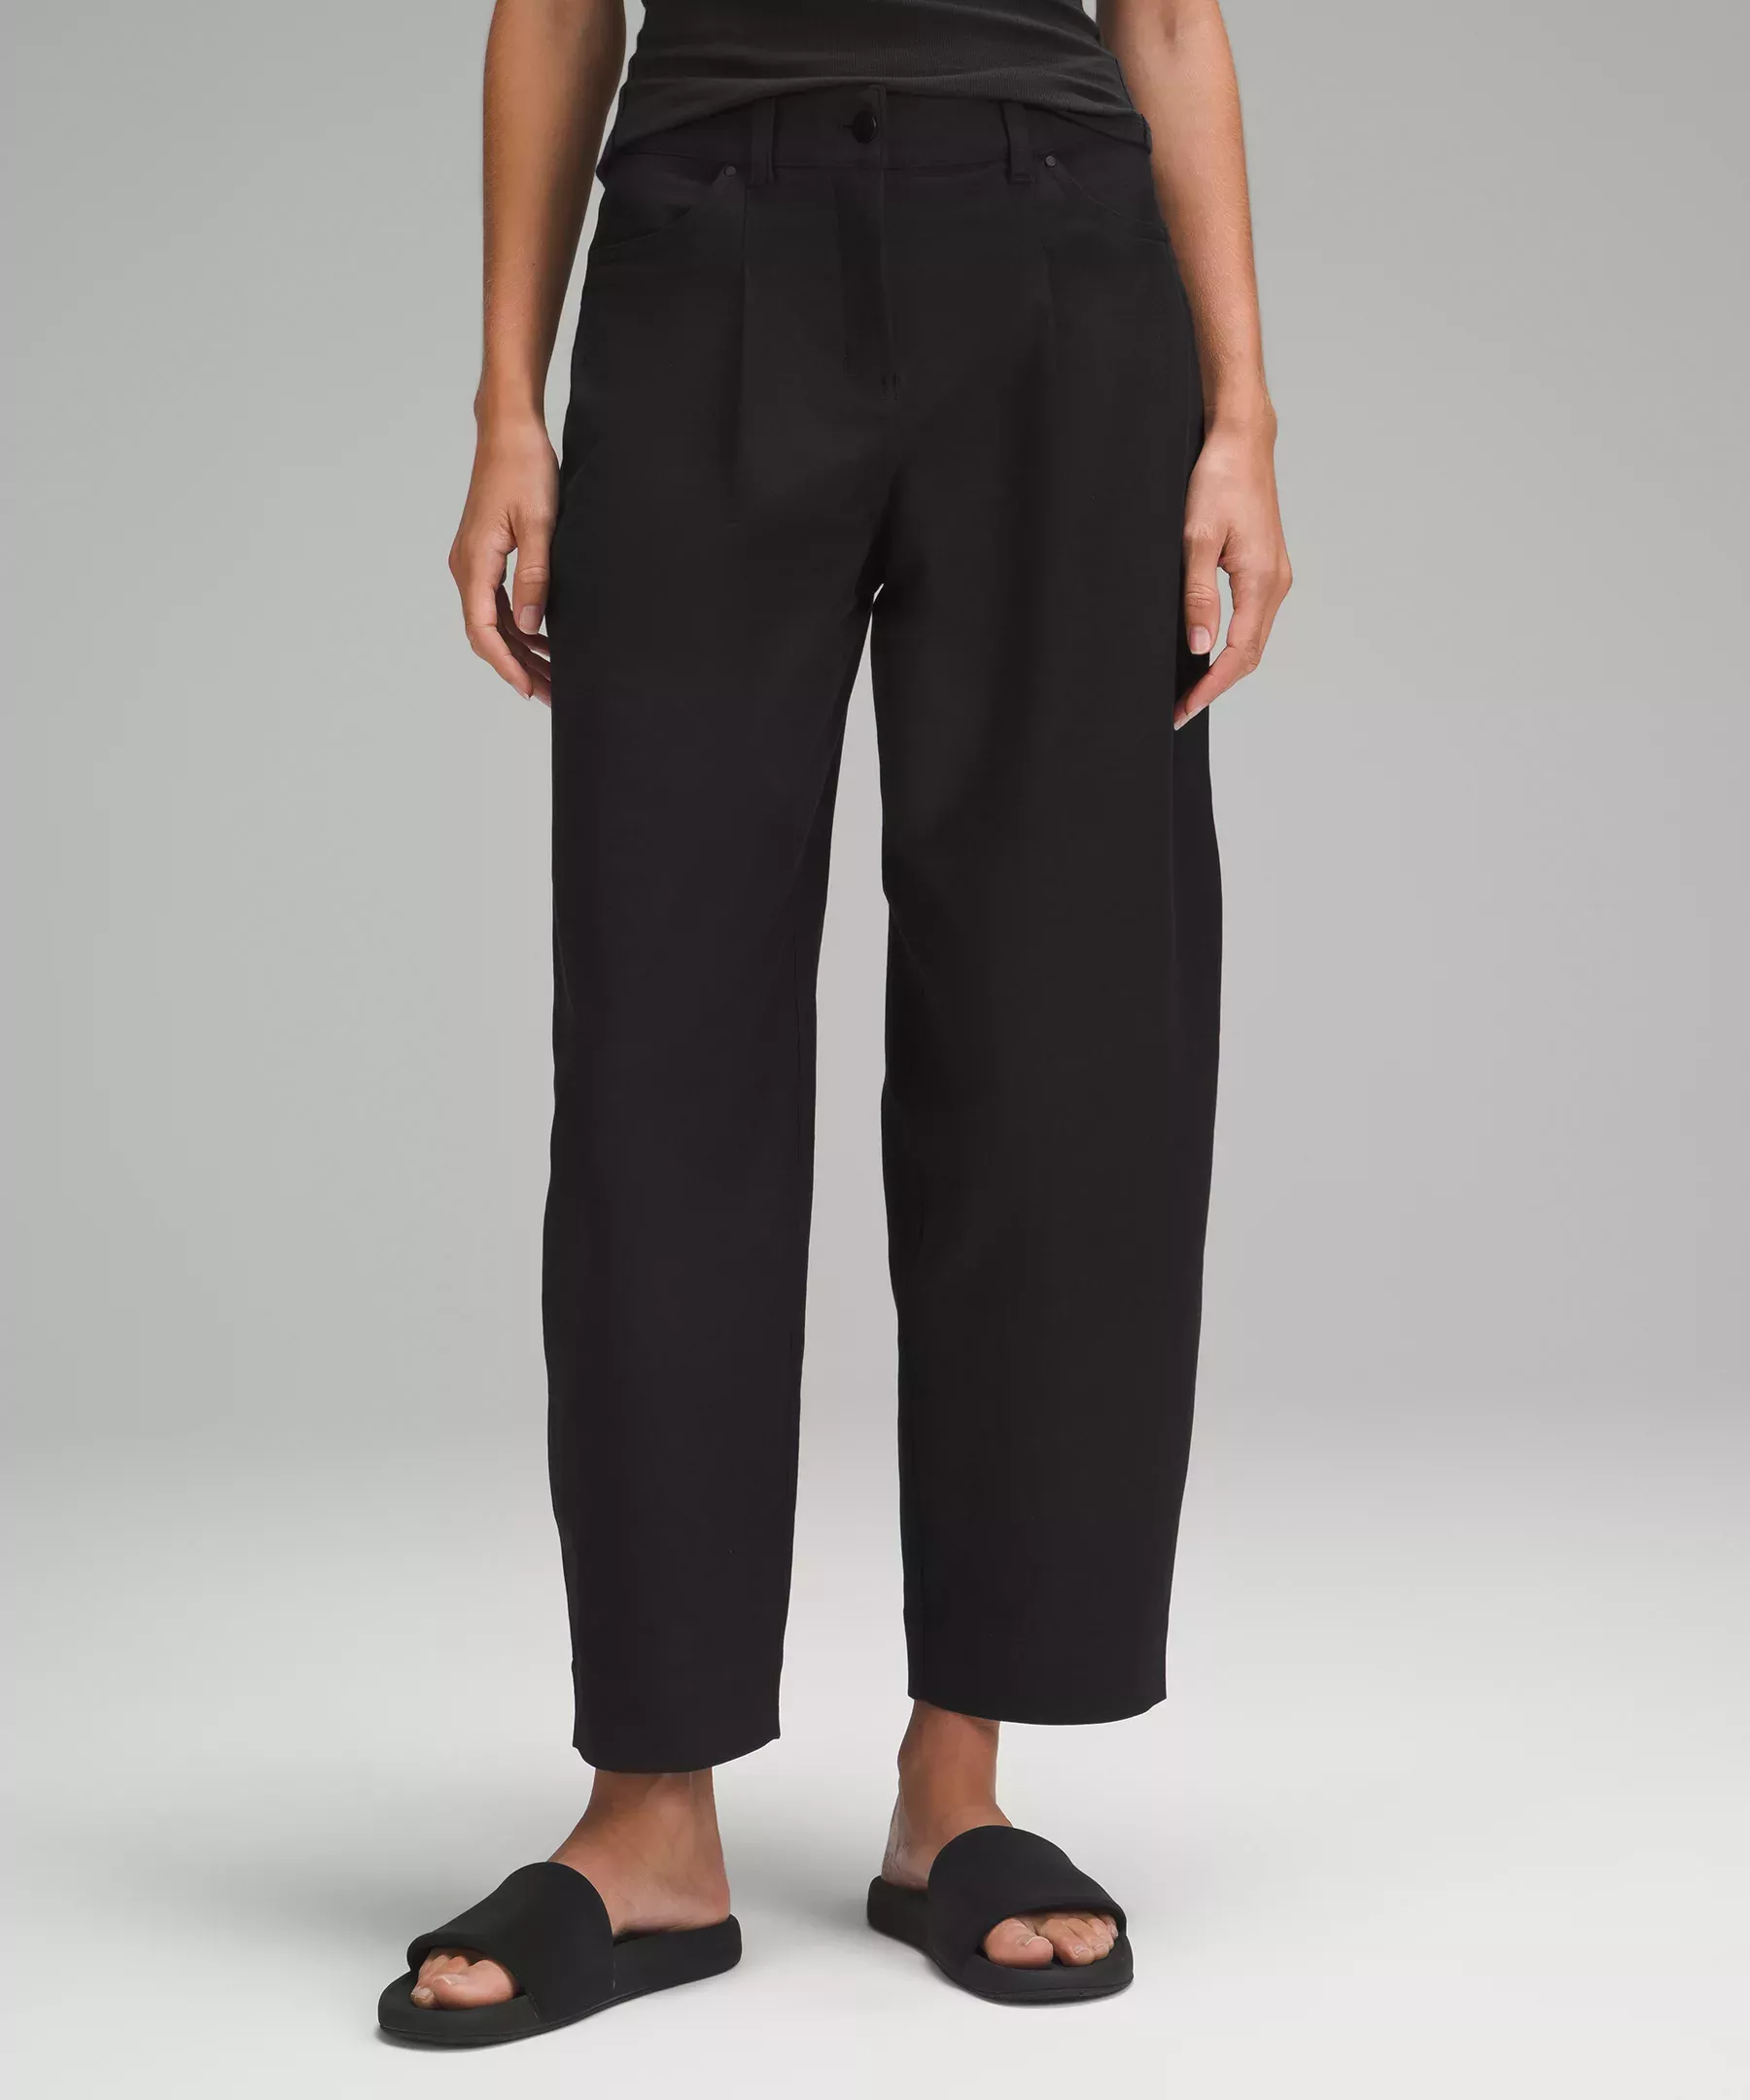 Lululemon City Sleek 5 Pocket Wide Leg Pant Black 7/8 Length Crop